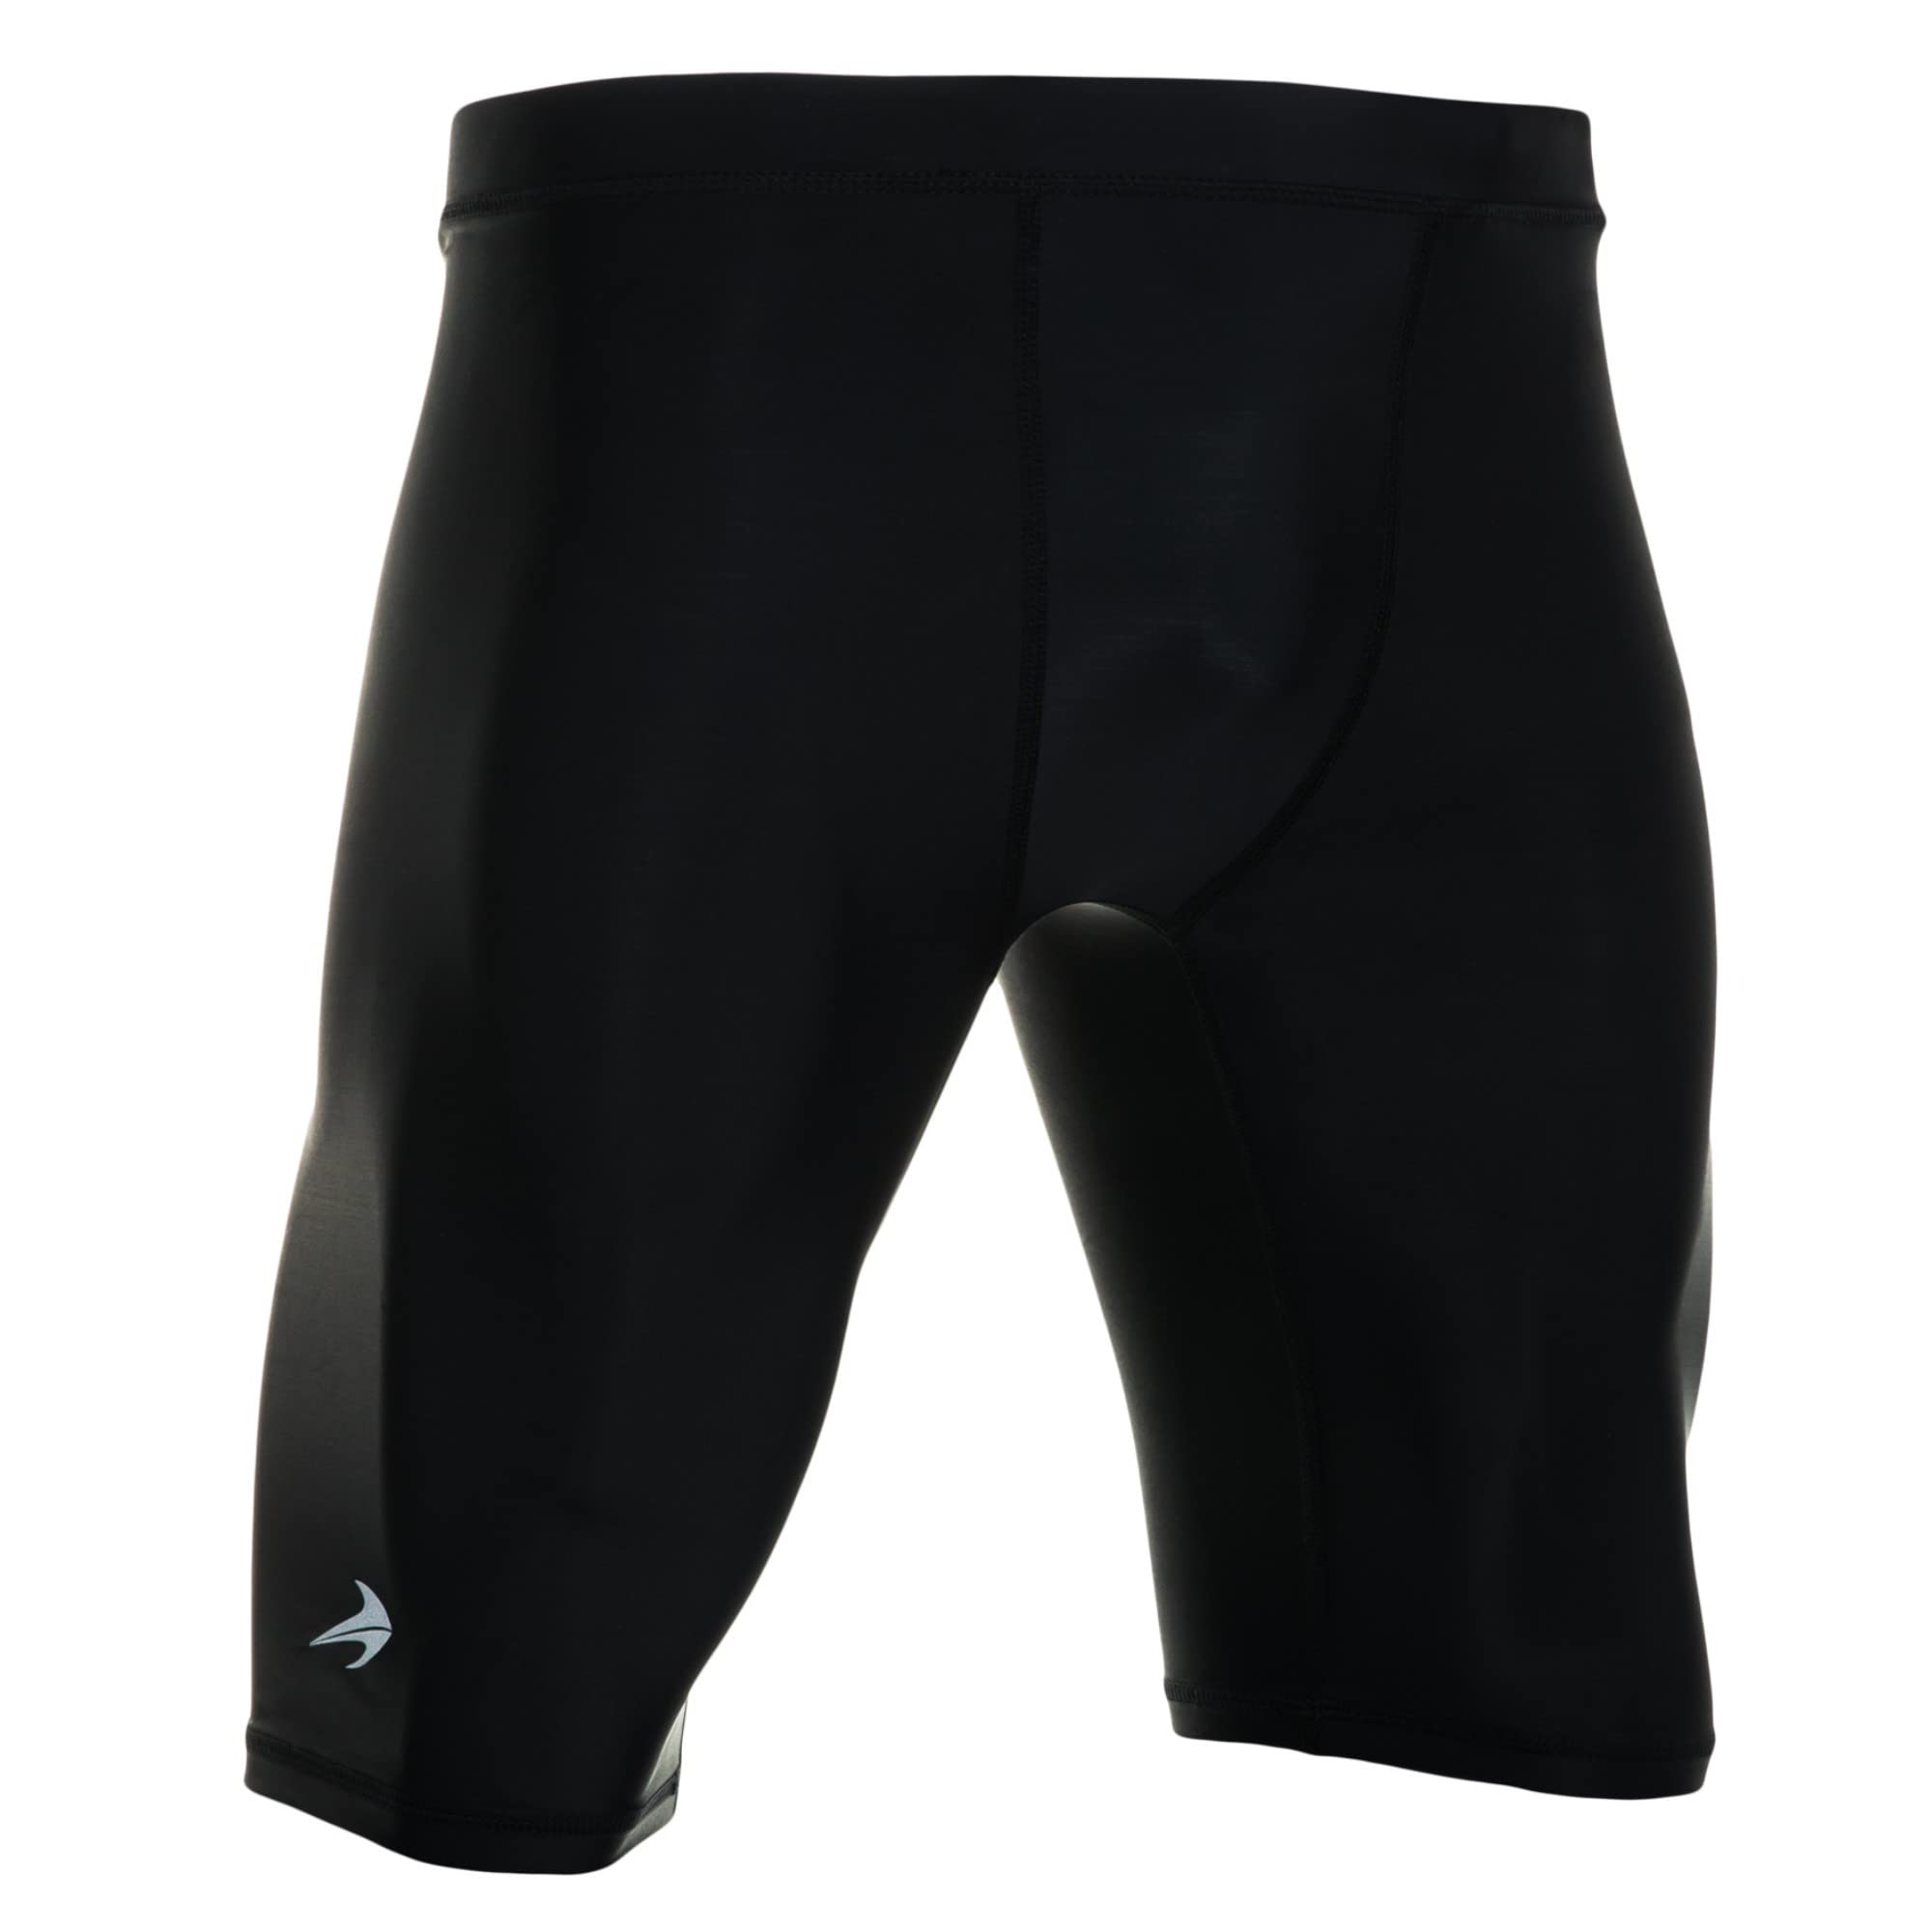 CompressionZ Compression Shorts Men - Sport Spandex Compression Underwear  Black 9 Large